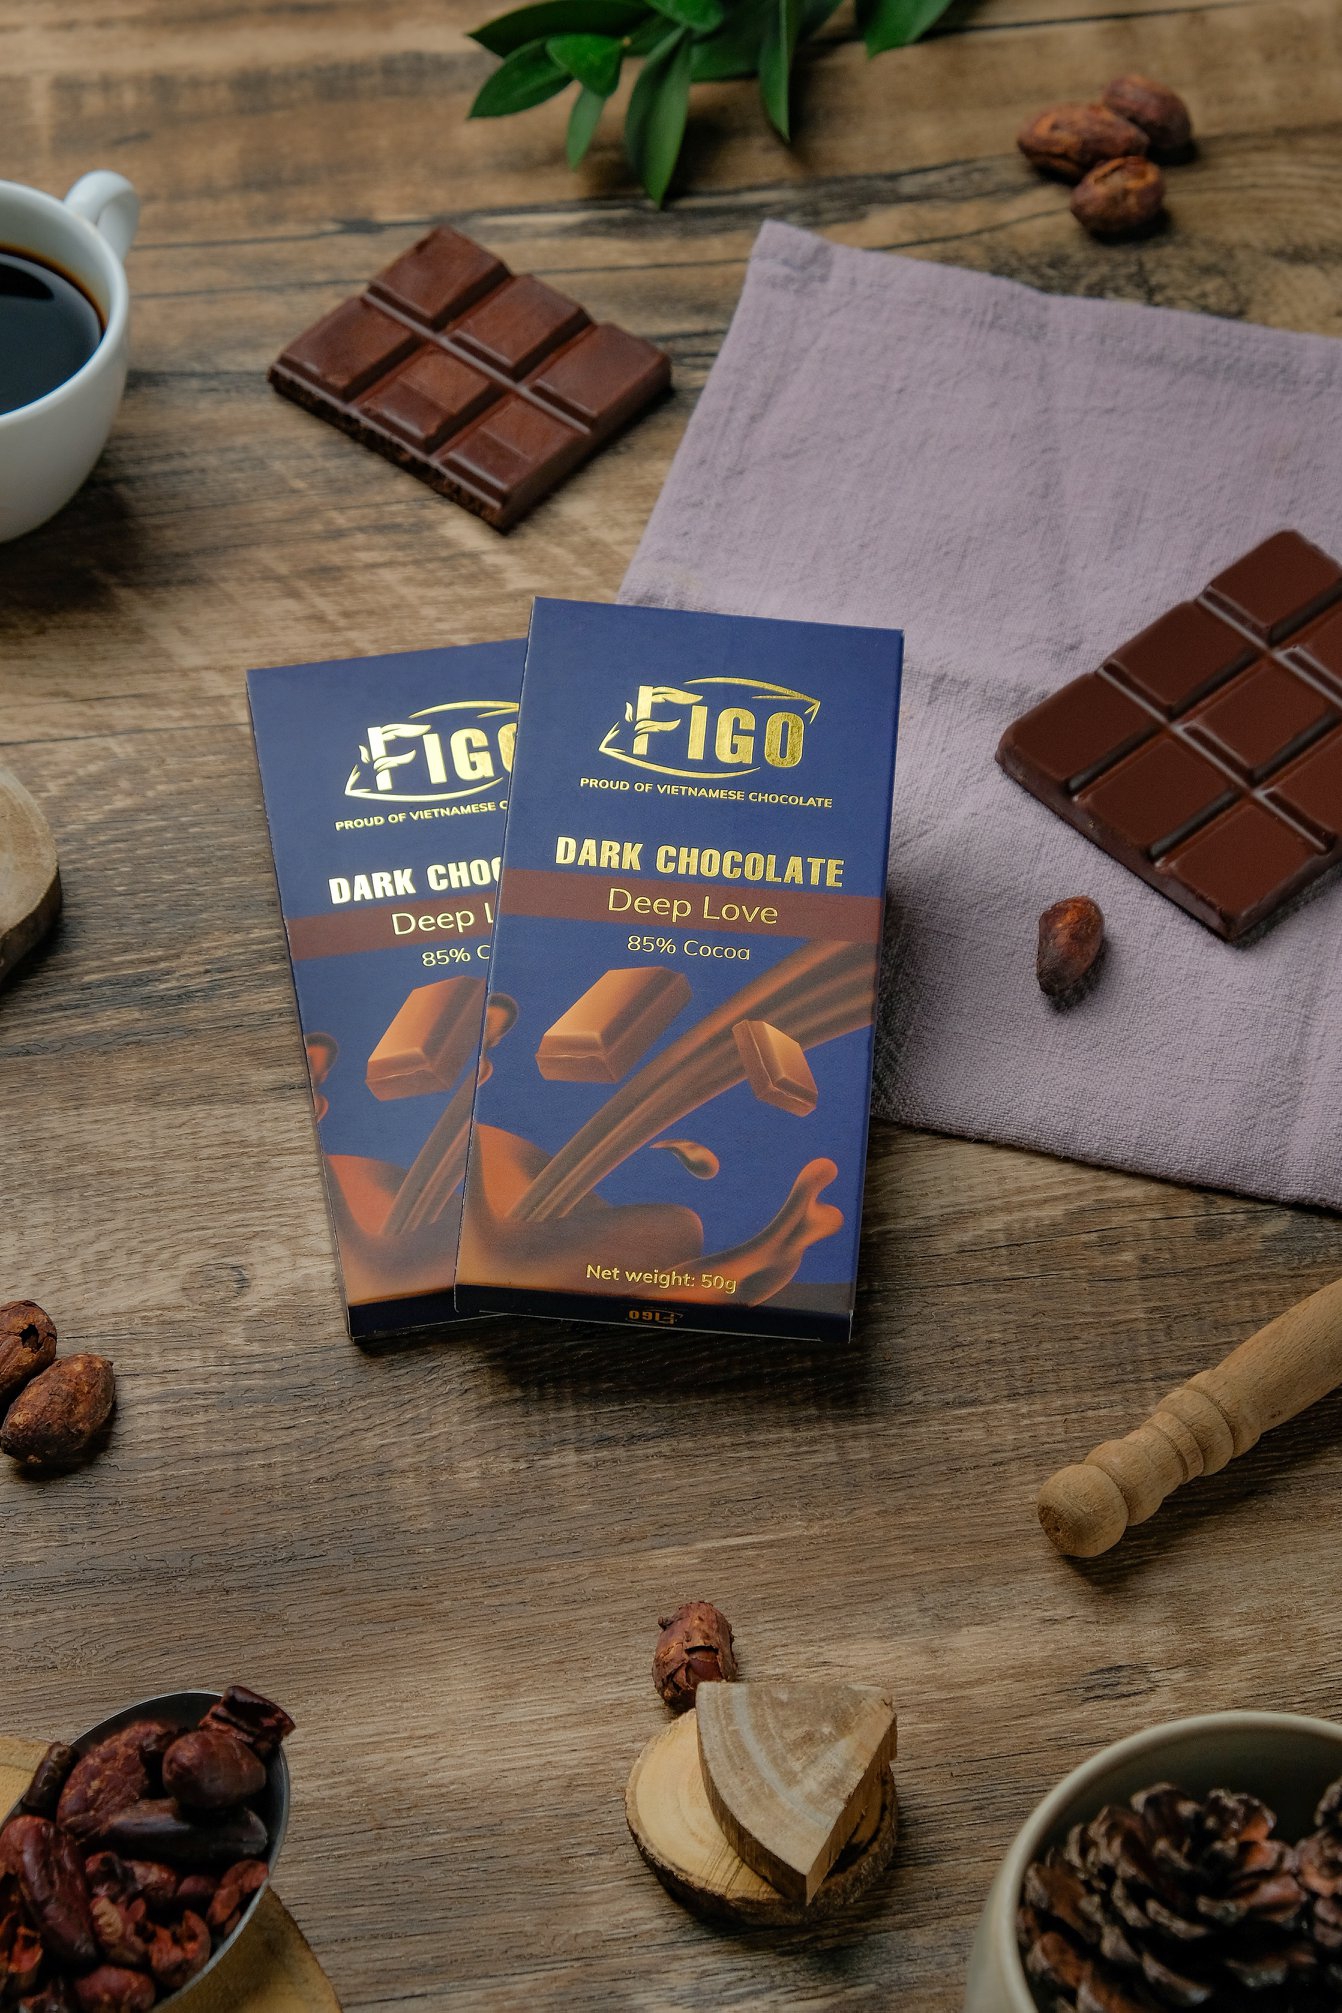 (Bar 50g) Socola đen 85% cacao ít đường dòng Deep Love 50g Figo - Vietnamese Chocolate